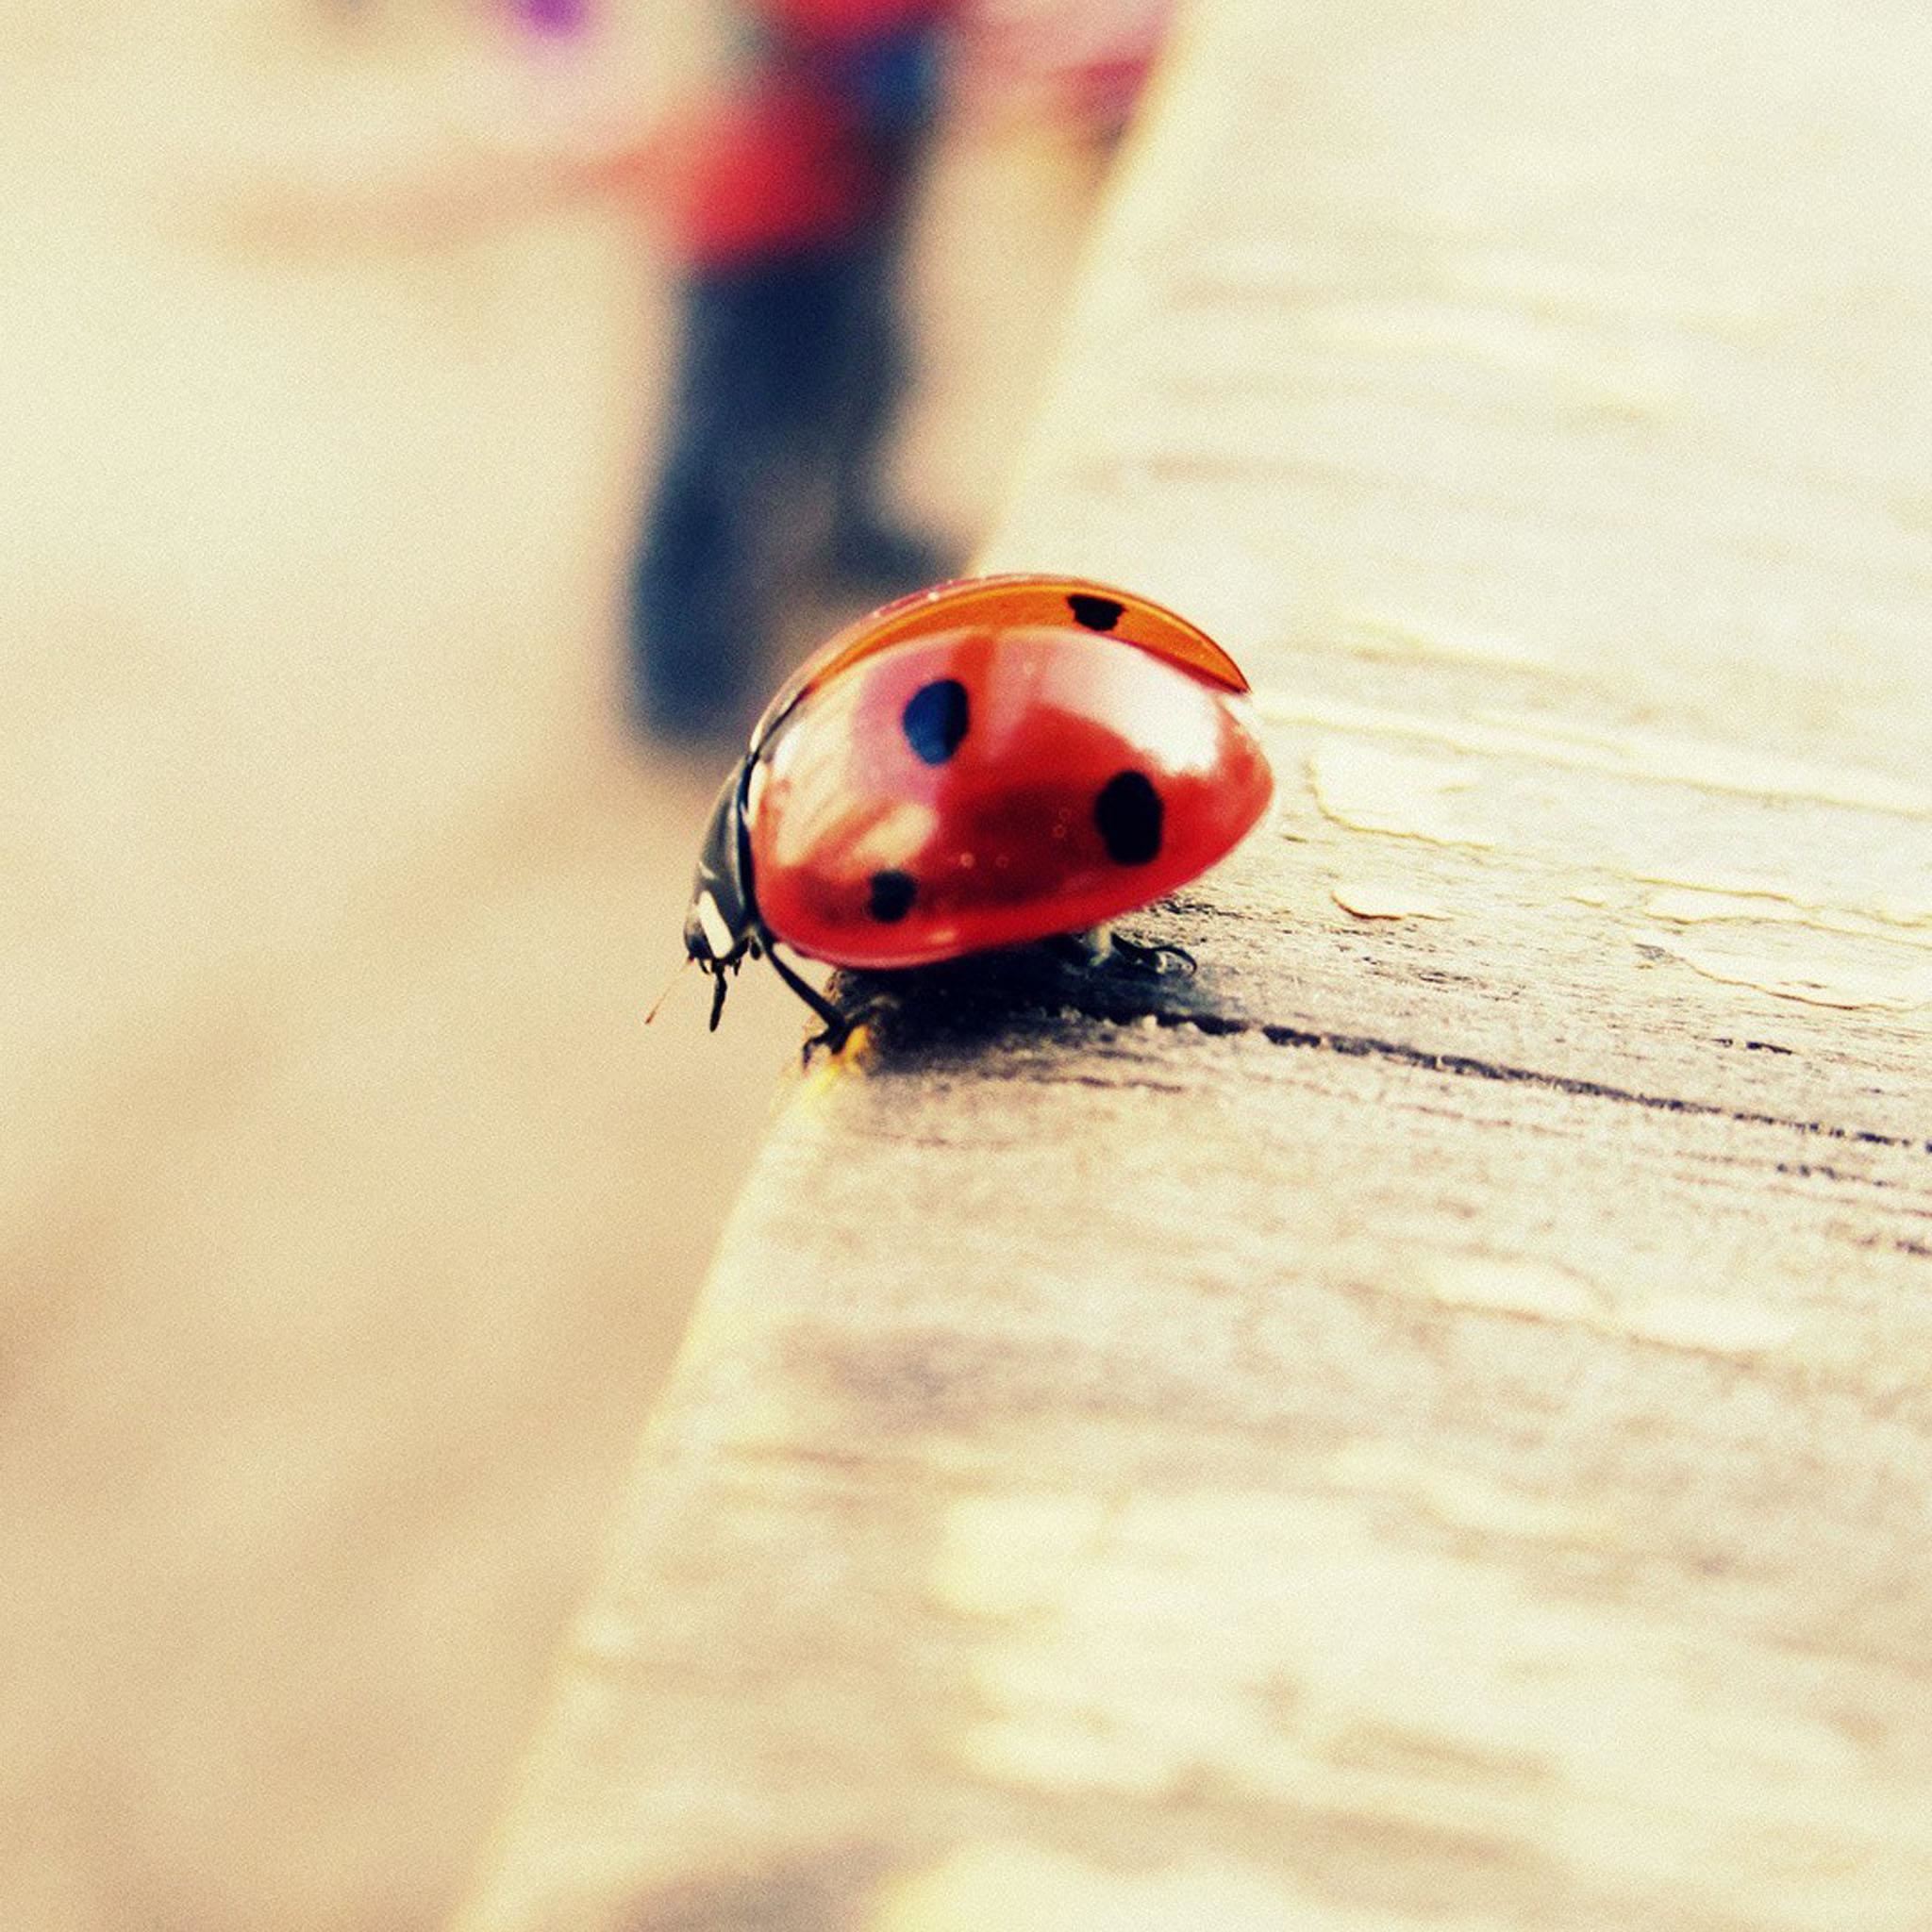 Pure Cute Ladybug Beside Wood iPad Air wallpaper 